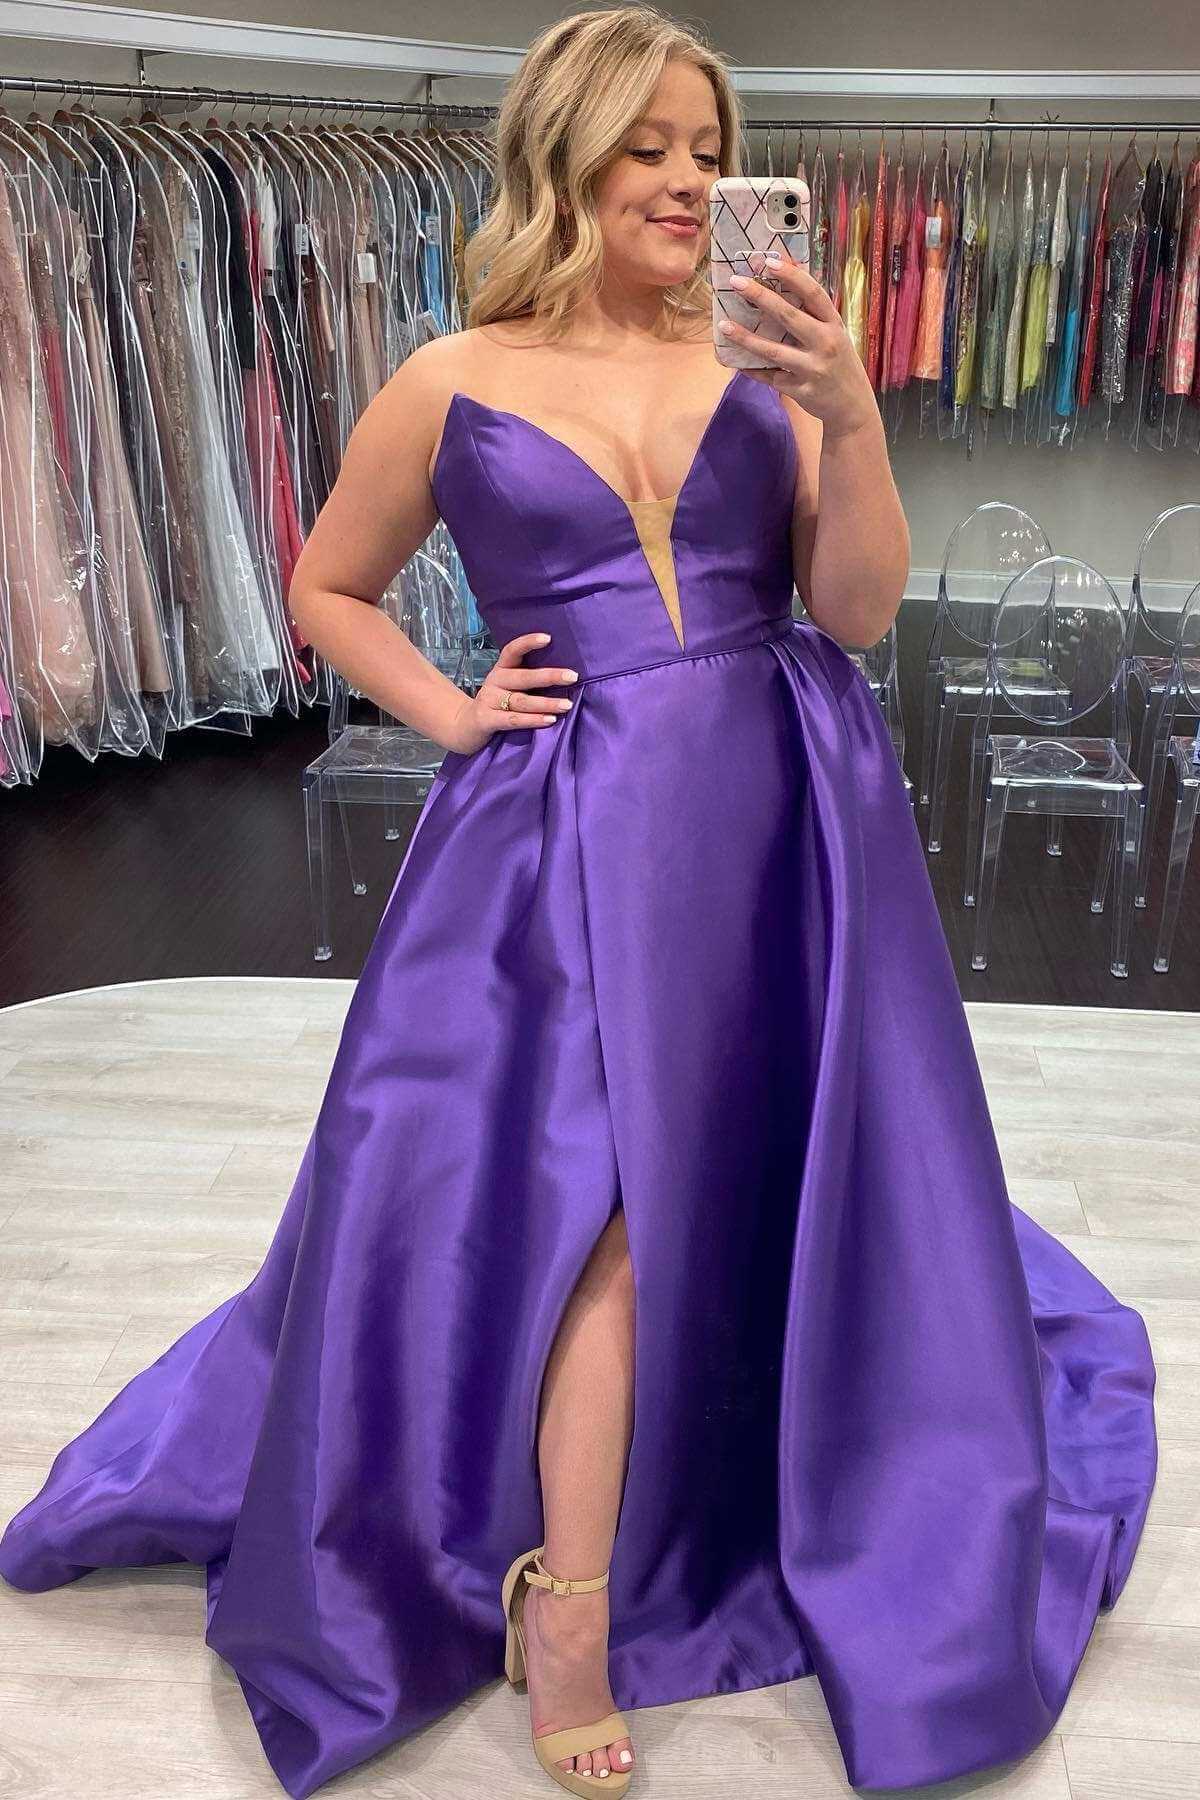 prom dress plus size]